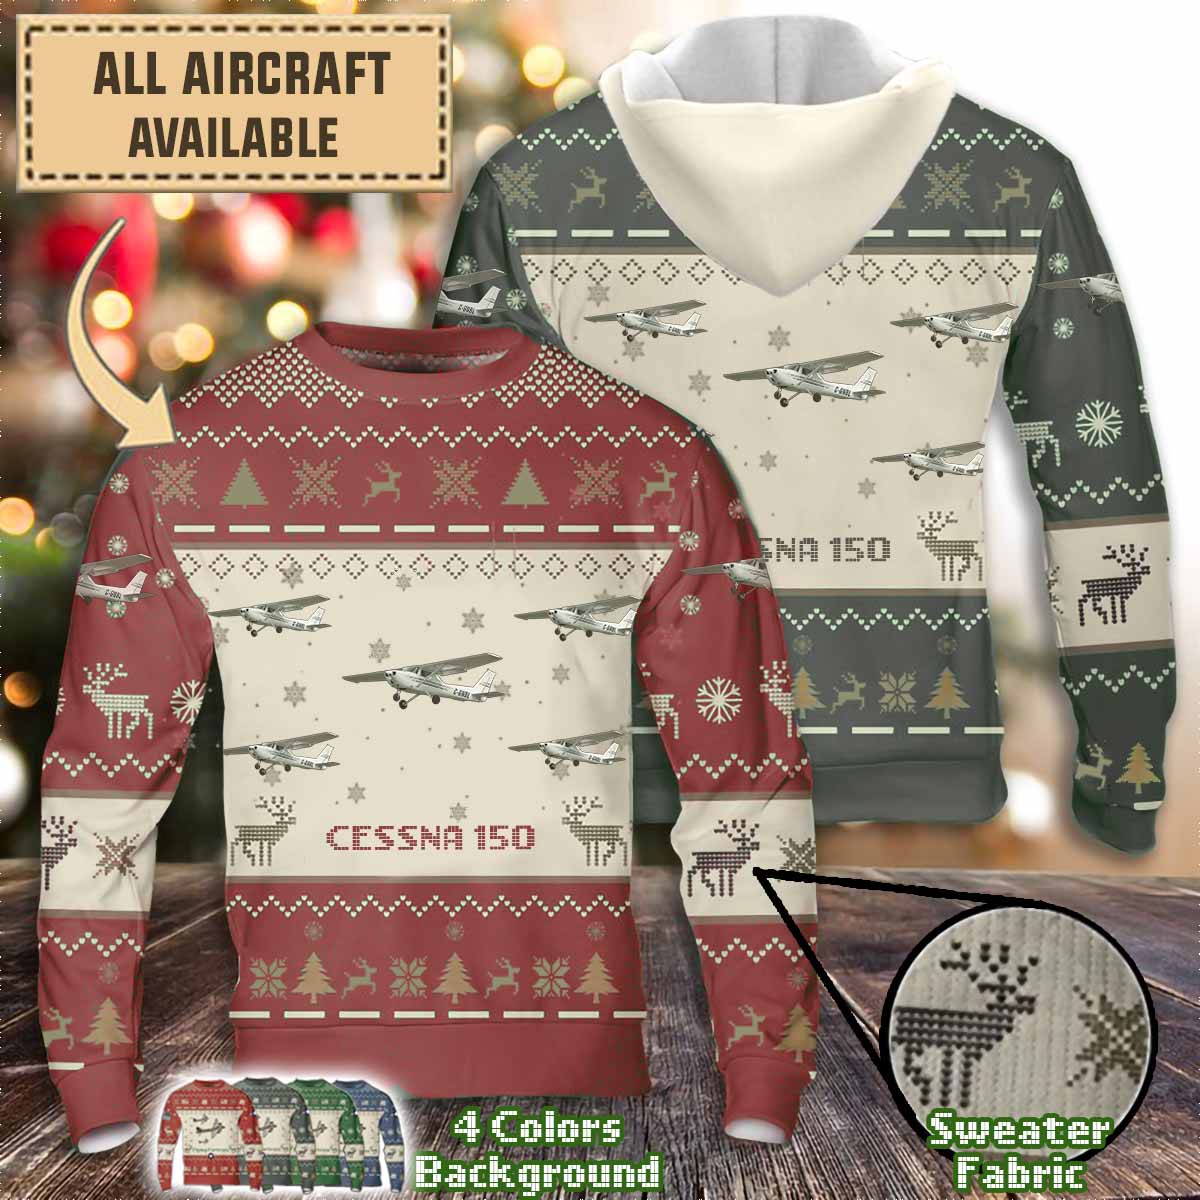 cessna 150 152aircraft sweater gwq2l